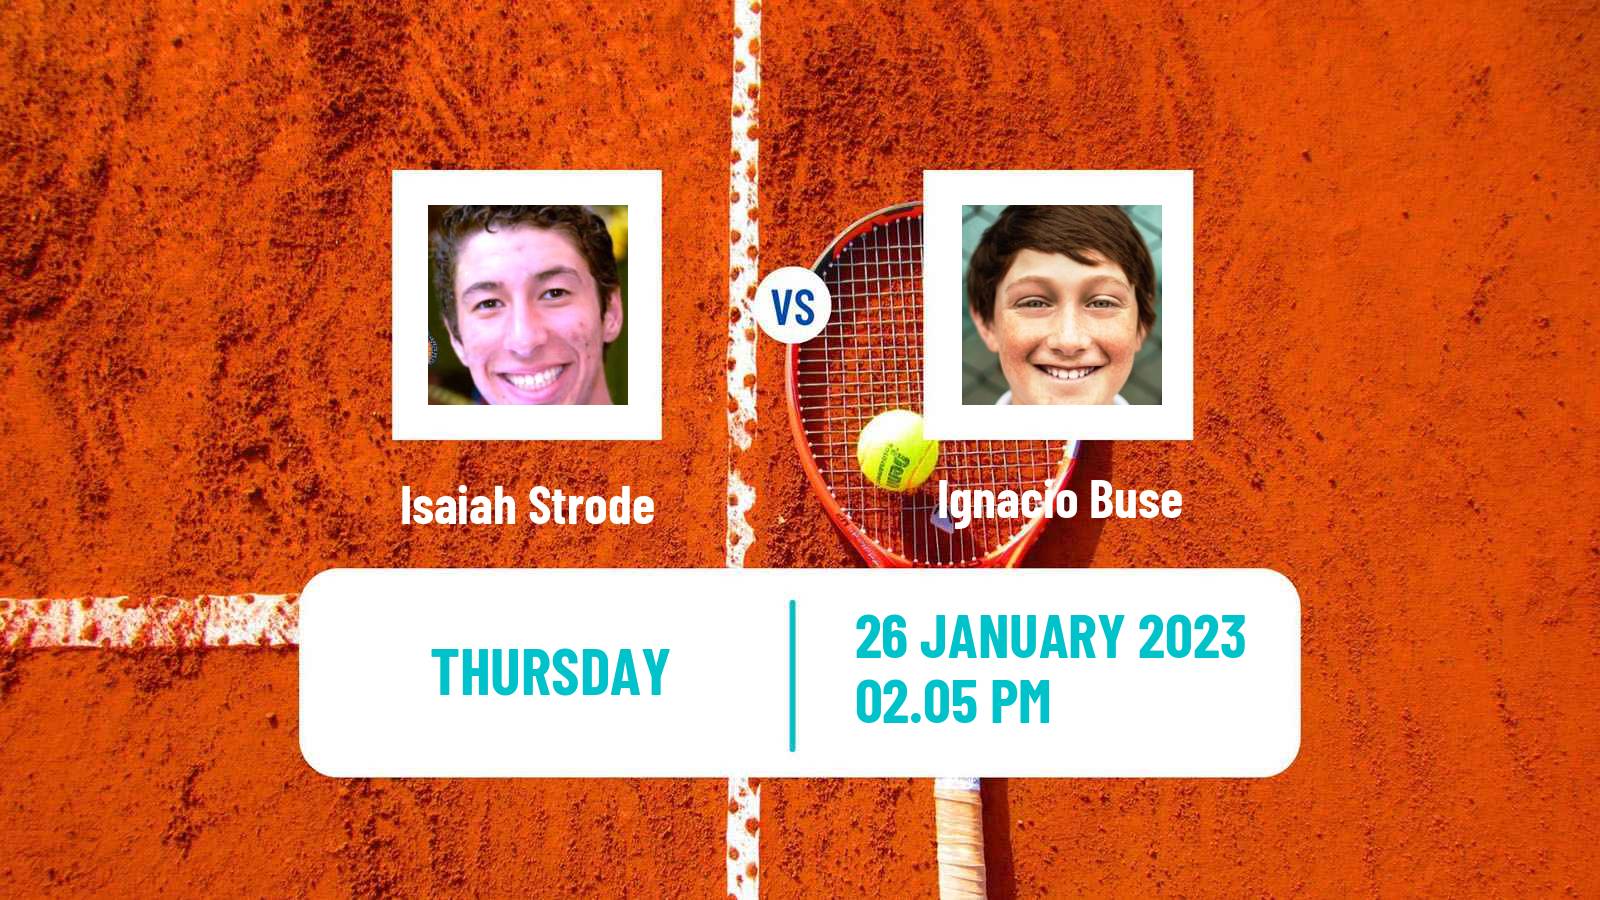 Tennis ITF Tournaments Isaiah Strode - Ignacio Buse